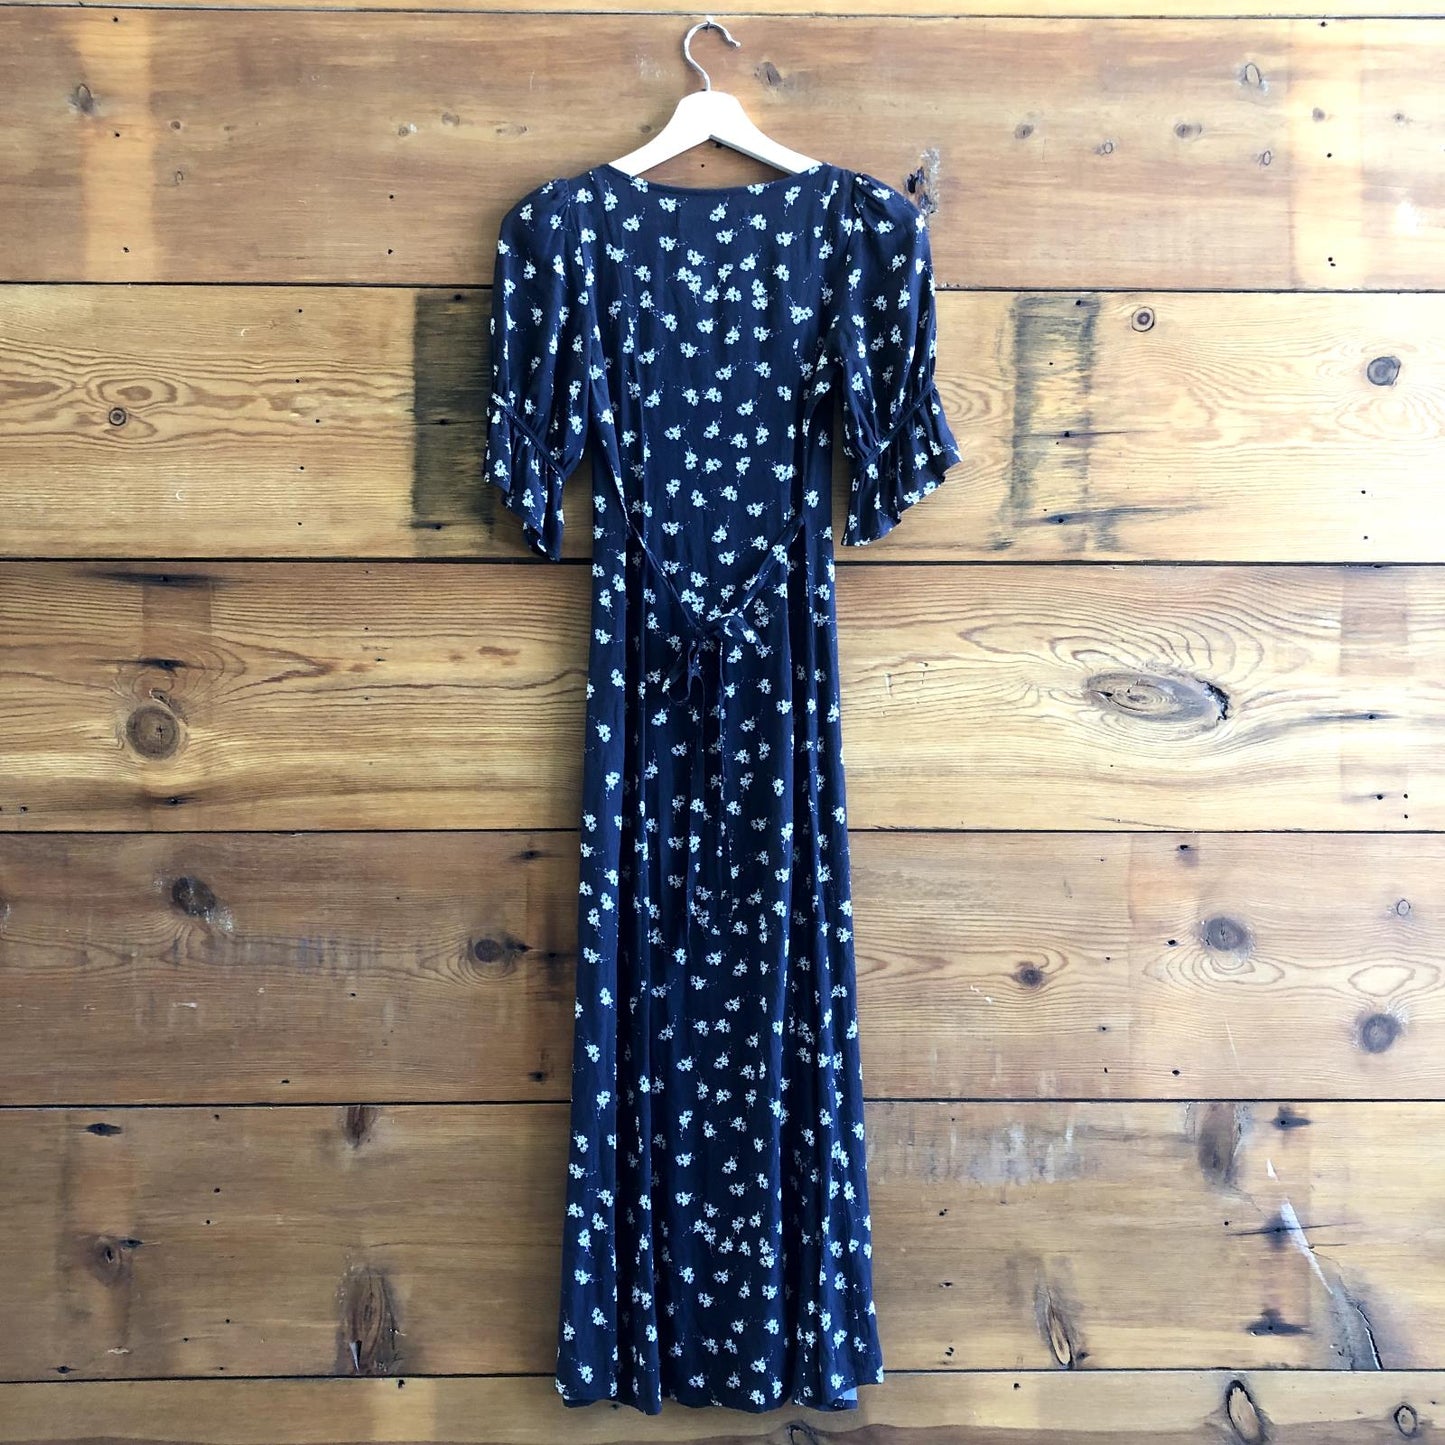 XS - Christy Dawn Black White Floral Print Short Sleeve Wrap Maxi Dress 0312IG